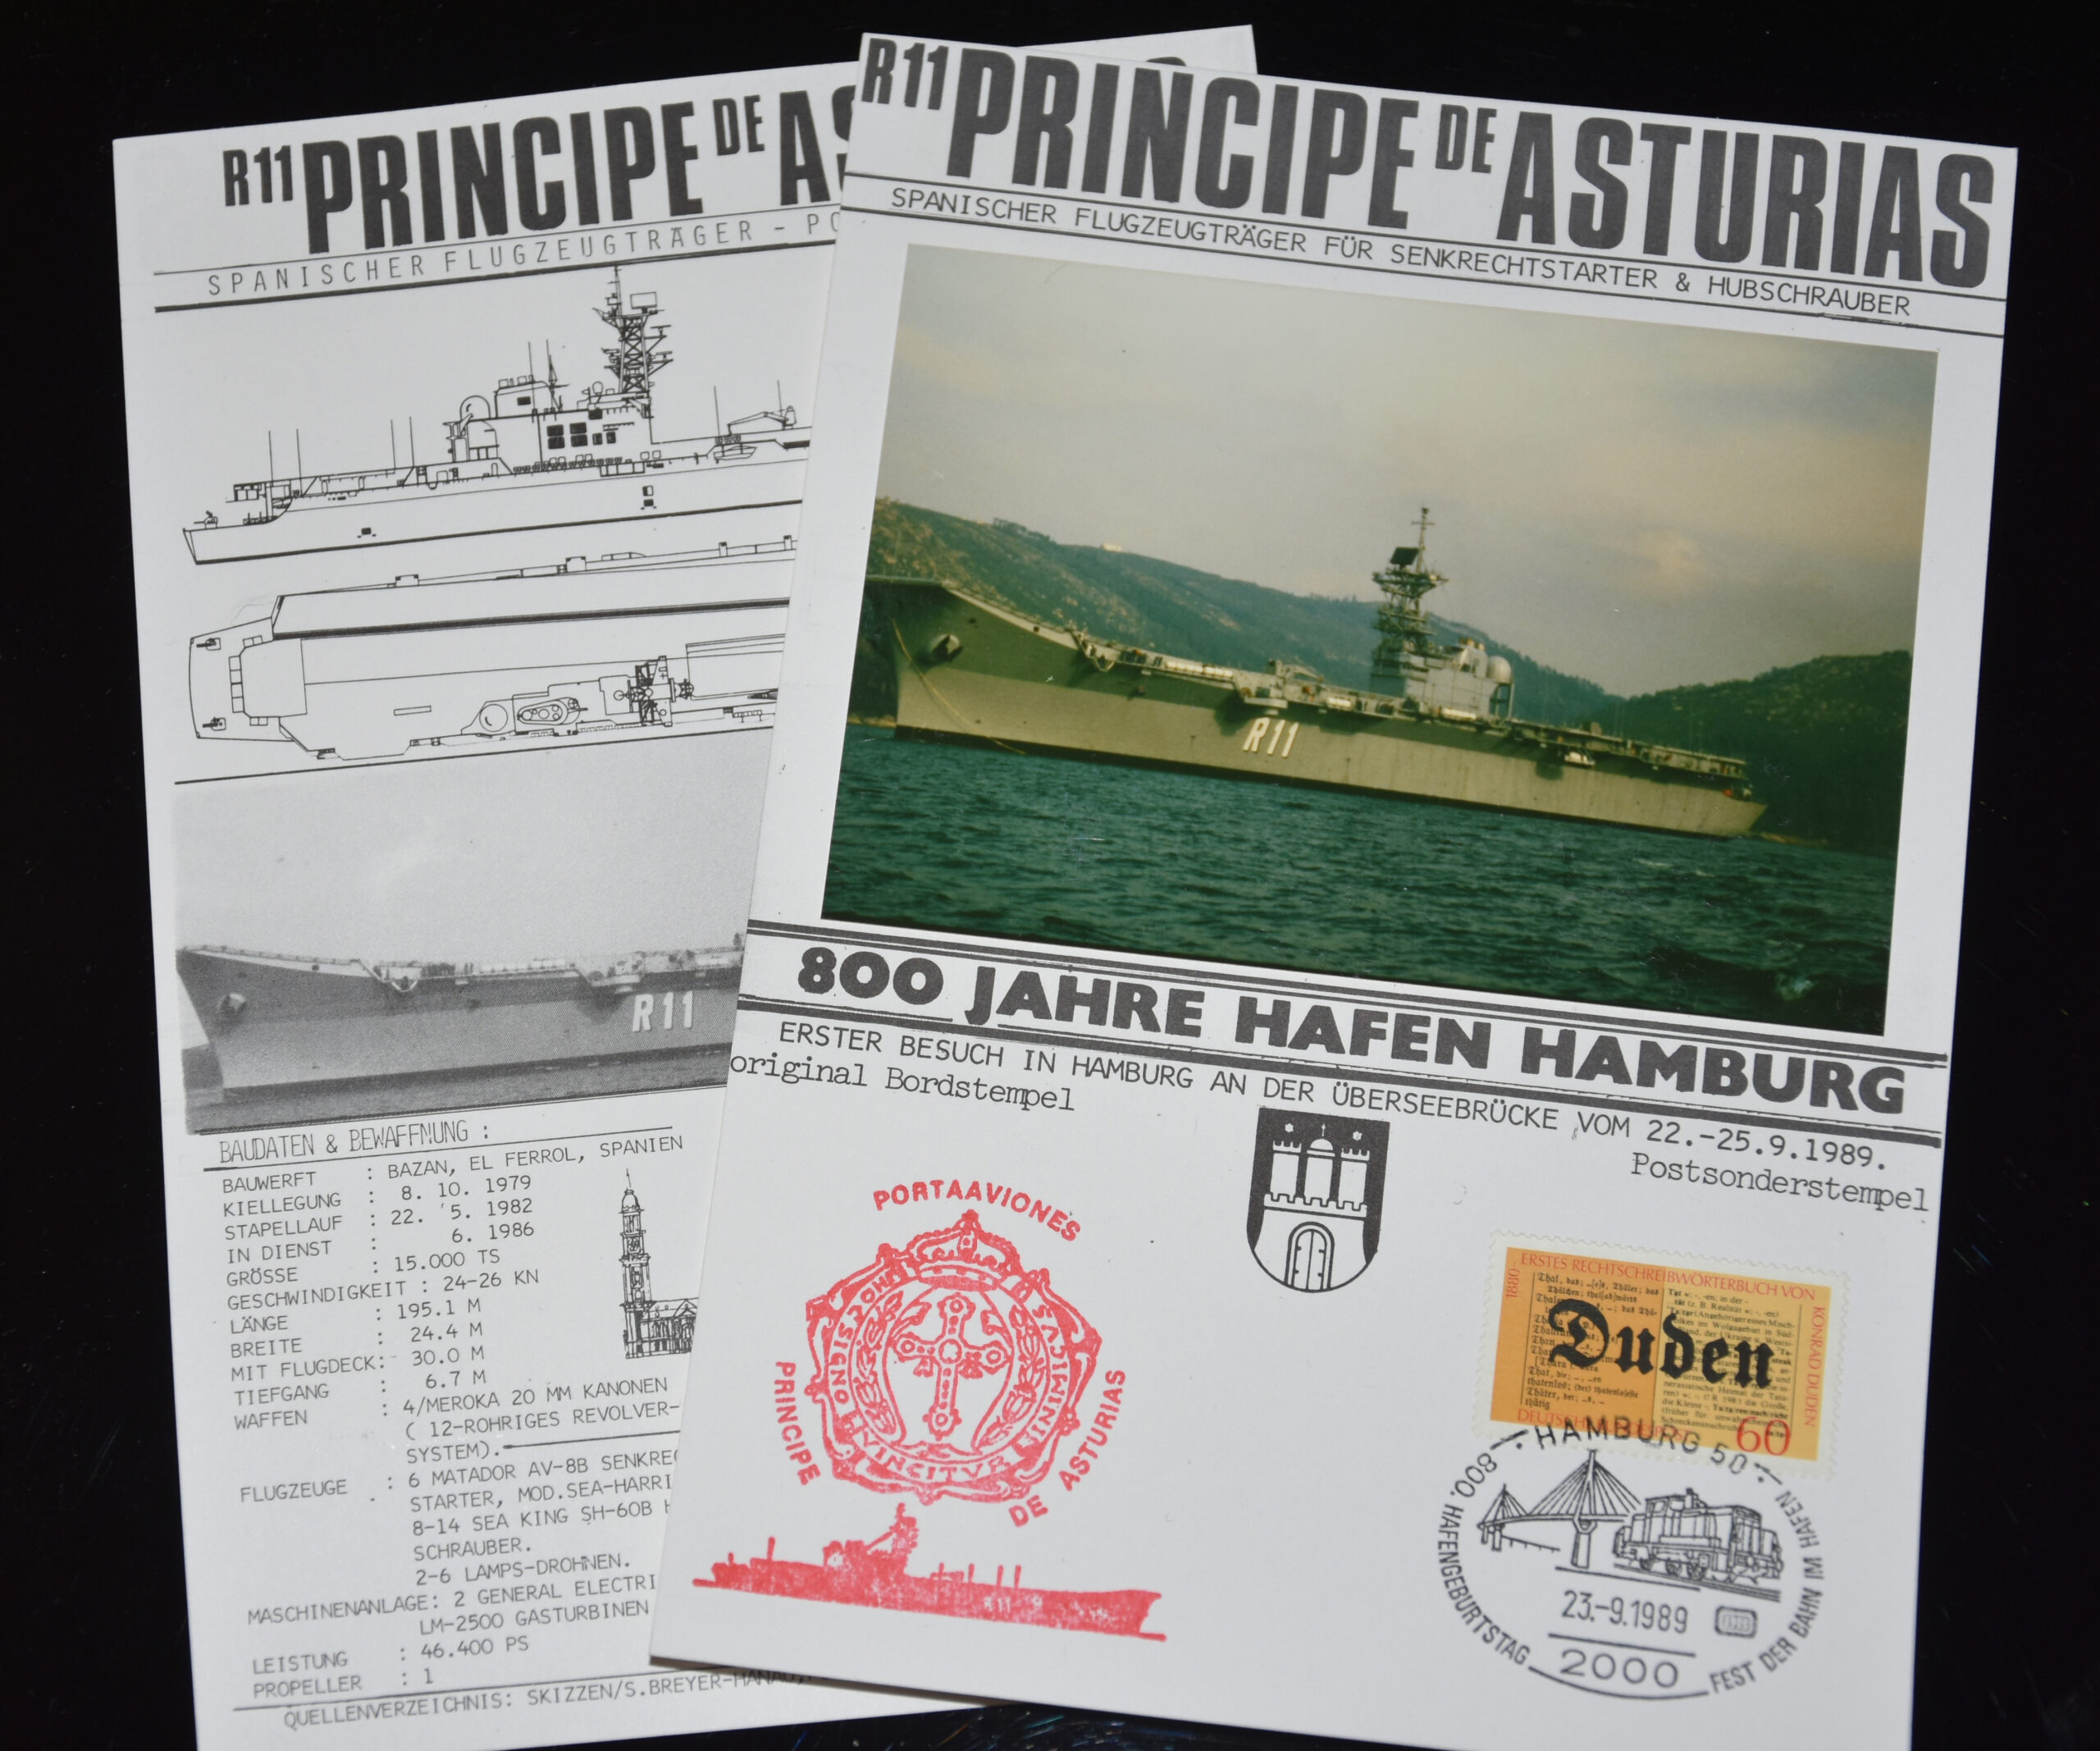 Der Flugzeugträger R 11 „Principe de Asturias“ aus Spanien…